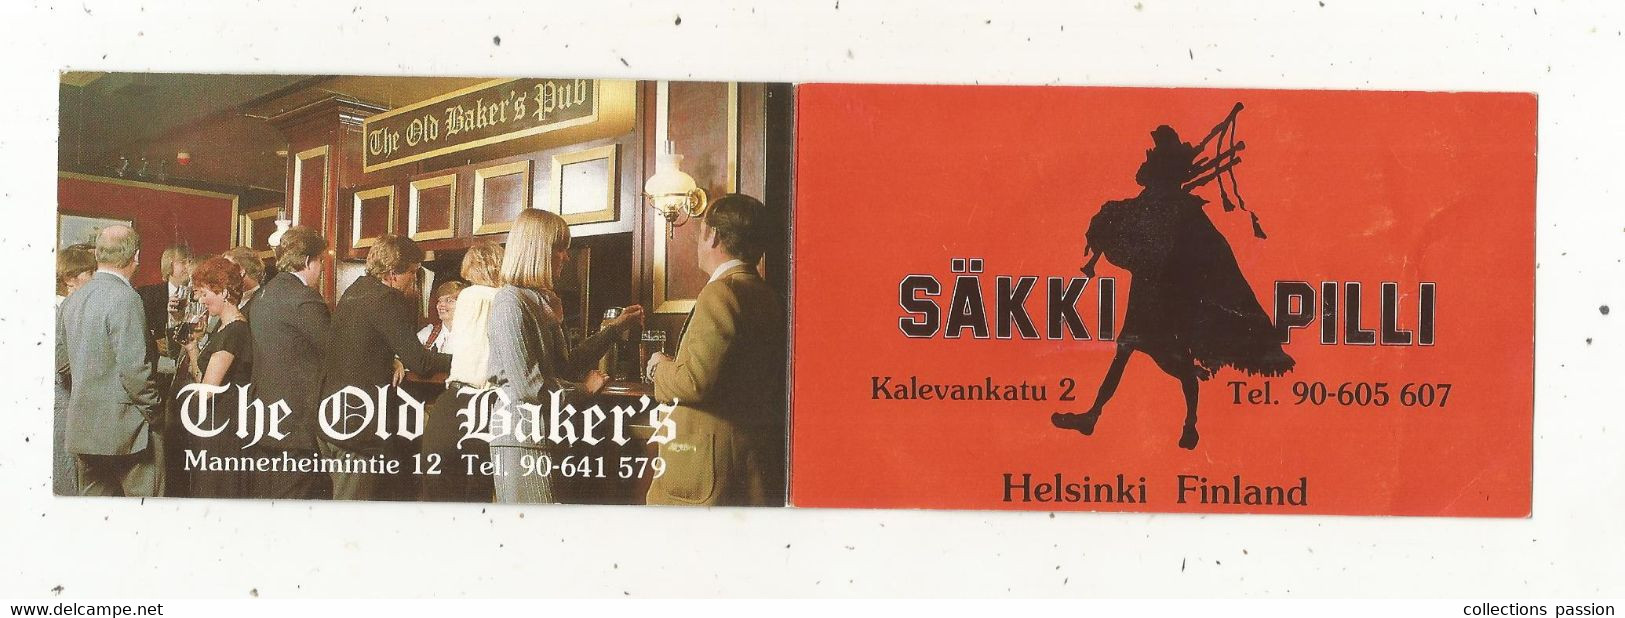 Carte De Visite, FINLAND,  FINLANDE,  HELSINKI,  SÄKKI PILLI , THE OLD BAKER'S, Pubs , Restaurants...2 Scans - Visitenkarten